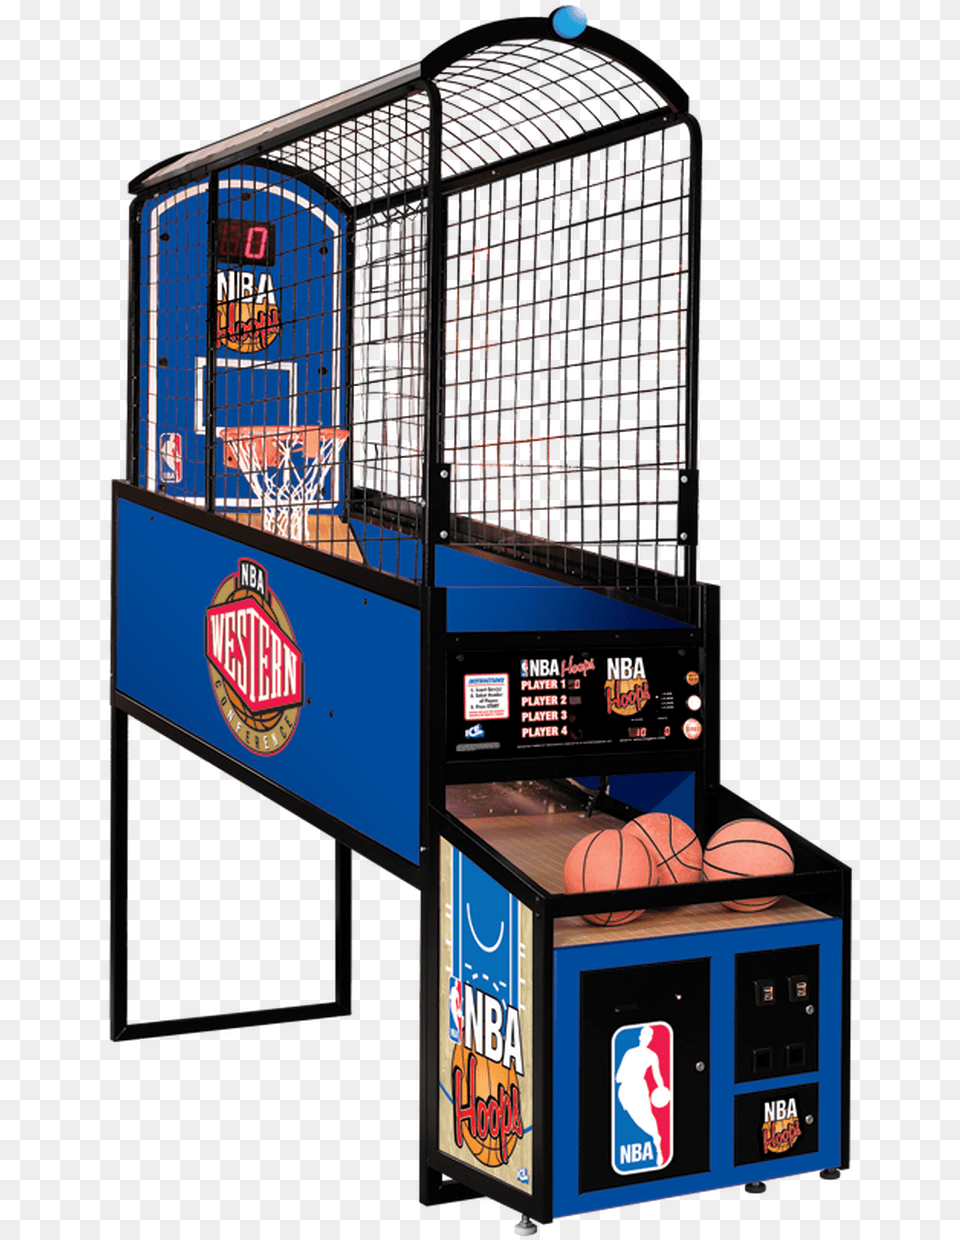 Nba Hoops Basketball Arcade Refurbished Basketball Hoop Arcade Game, Ball, Basketball (ball), Sport, Arcade Game Machine Free Png Download